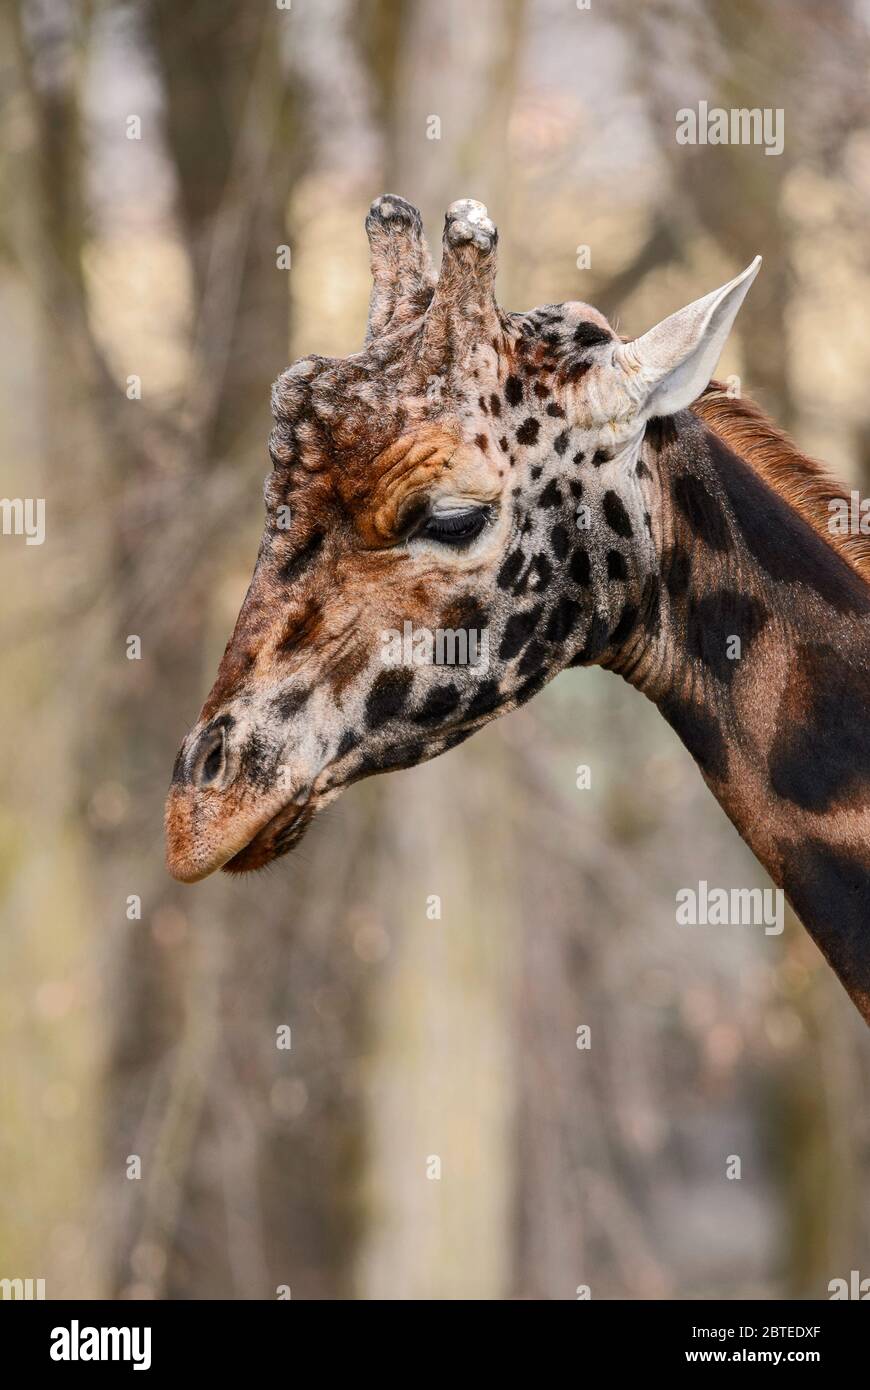 Girafe - Giraffa camelopardalis, potrait de girafé, safari au Kenya, en Afrique, membre mignon des cinq grands mammifères africains. Banque D'Images